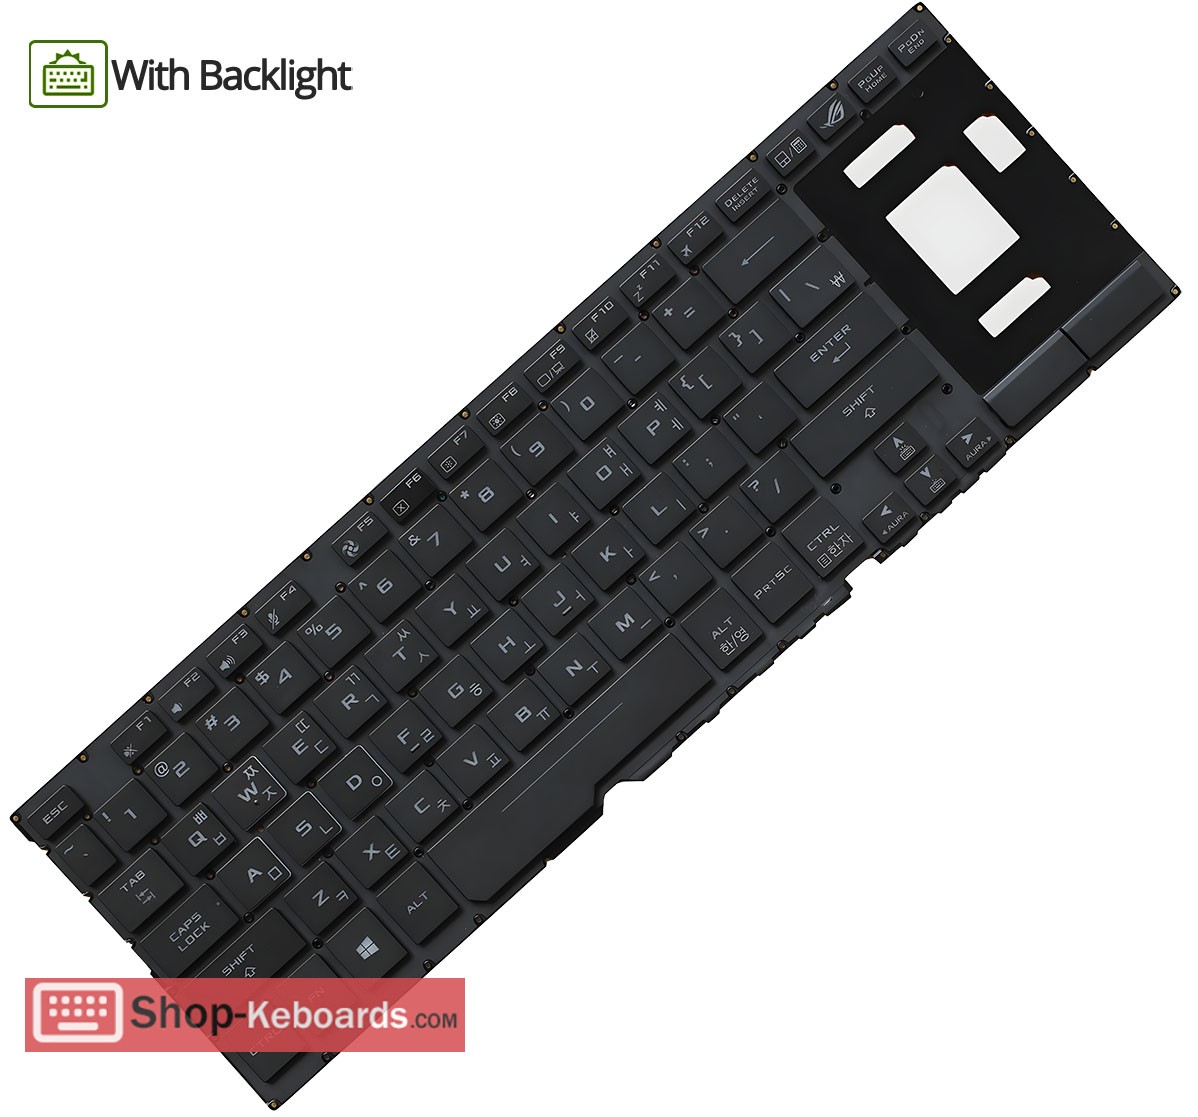 Asus ROG rog-gx531gm-bh71-BH71  Keyboard replacement